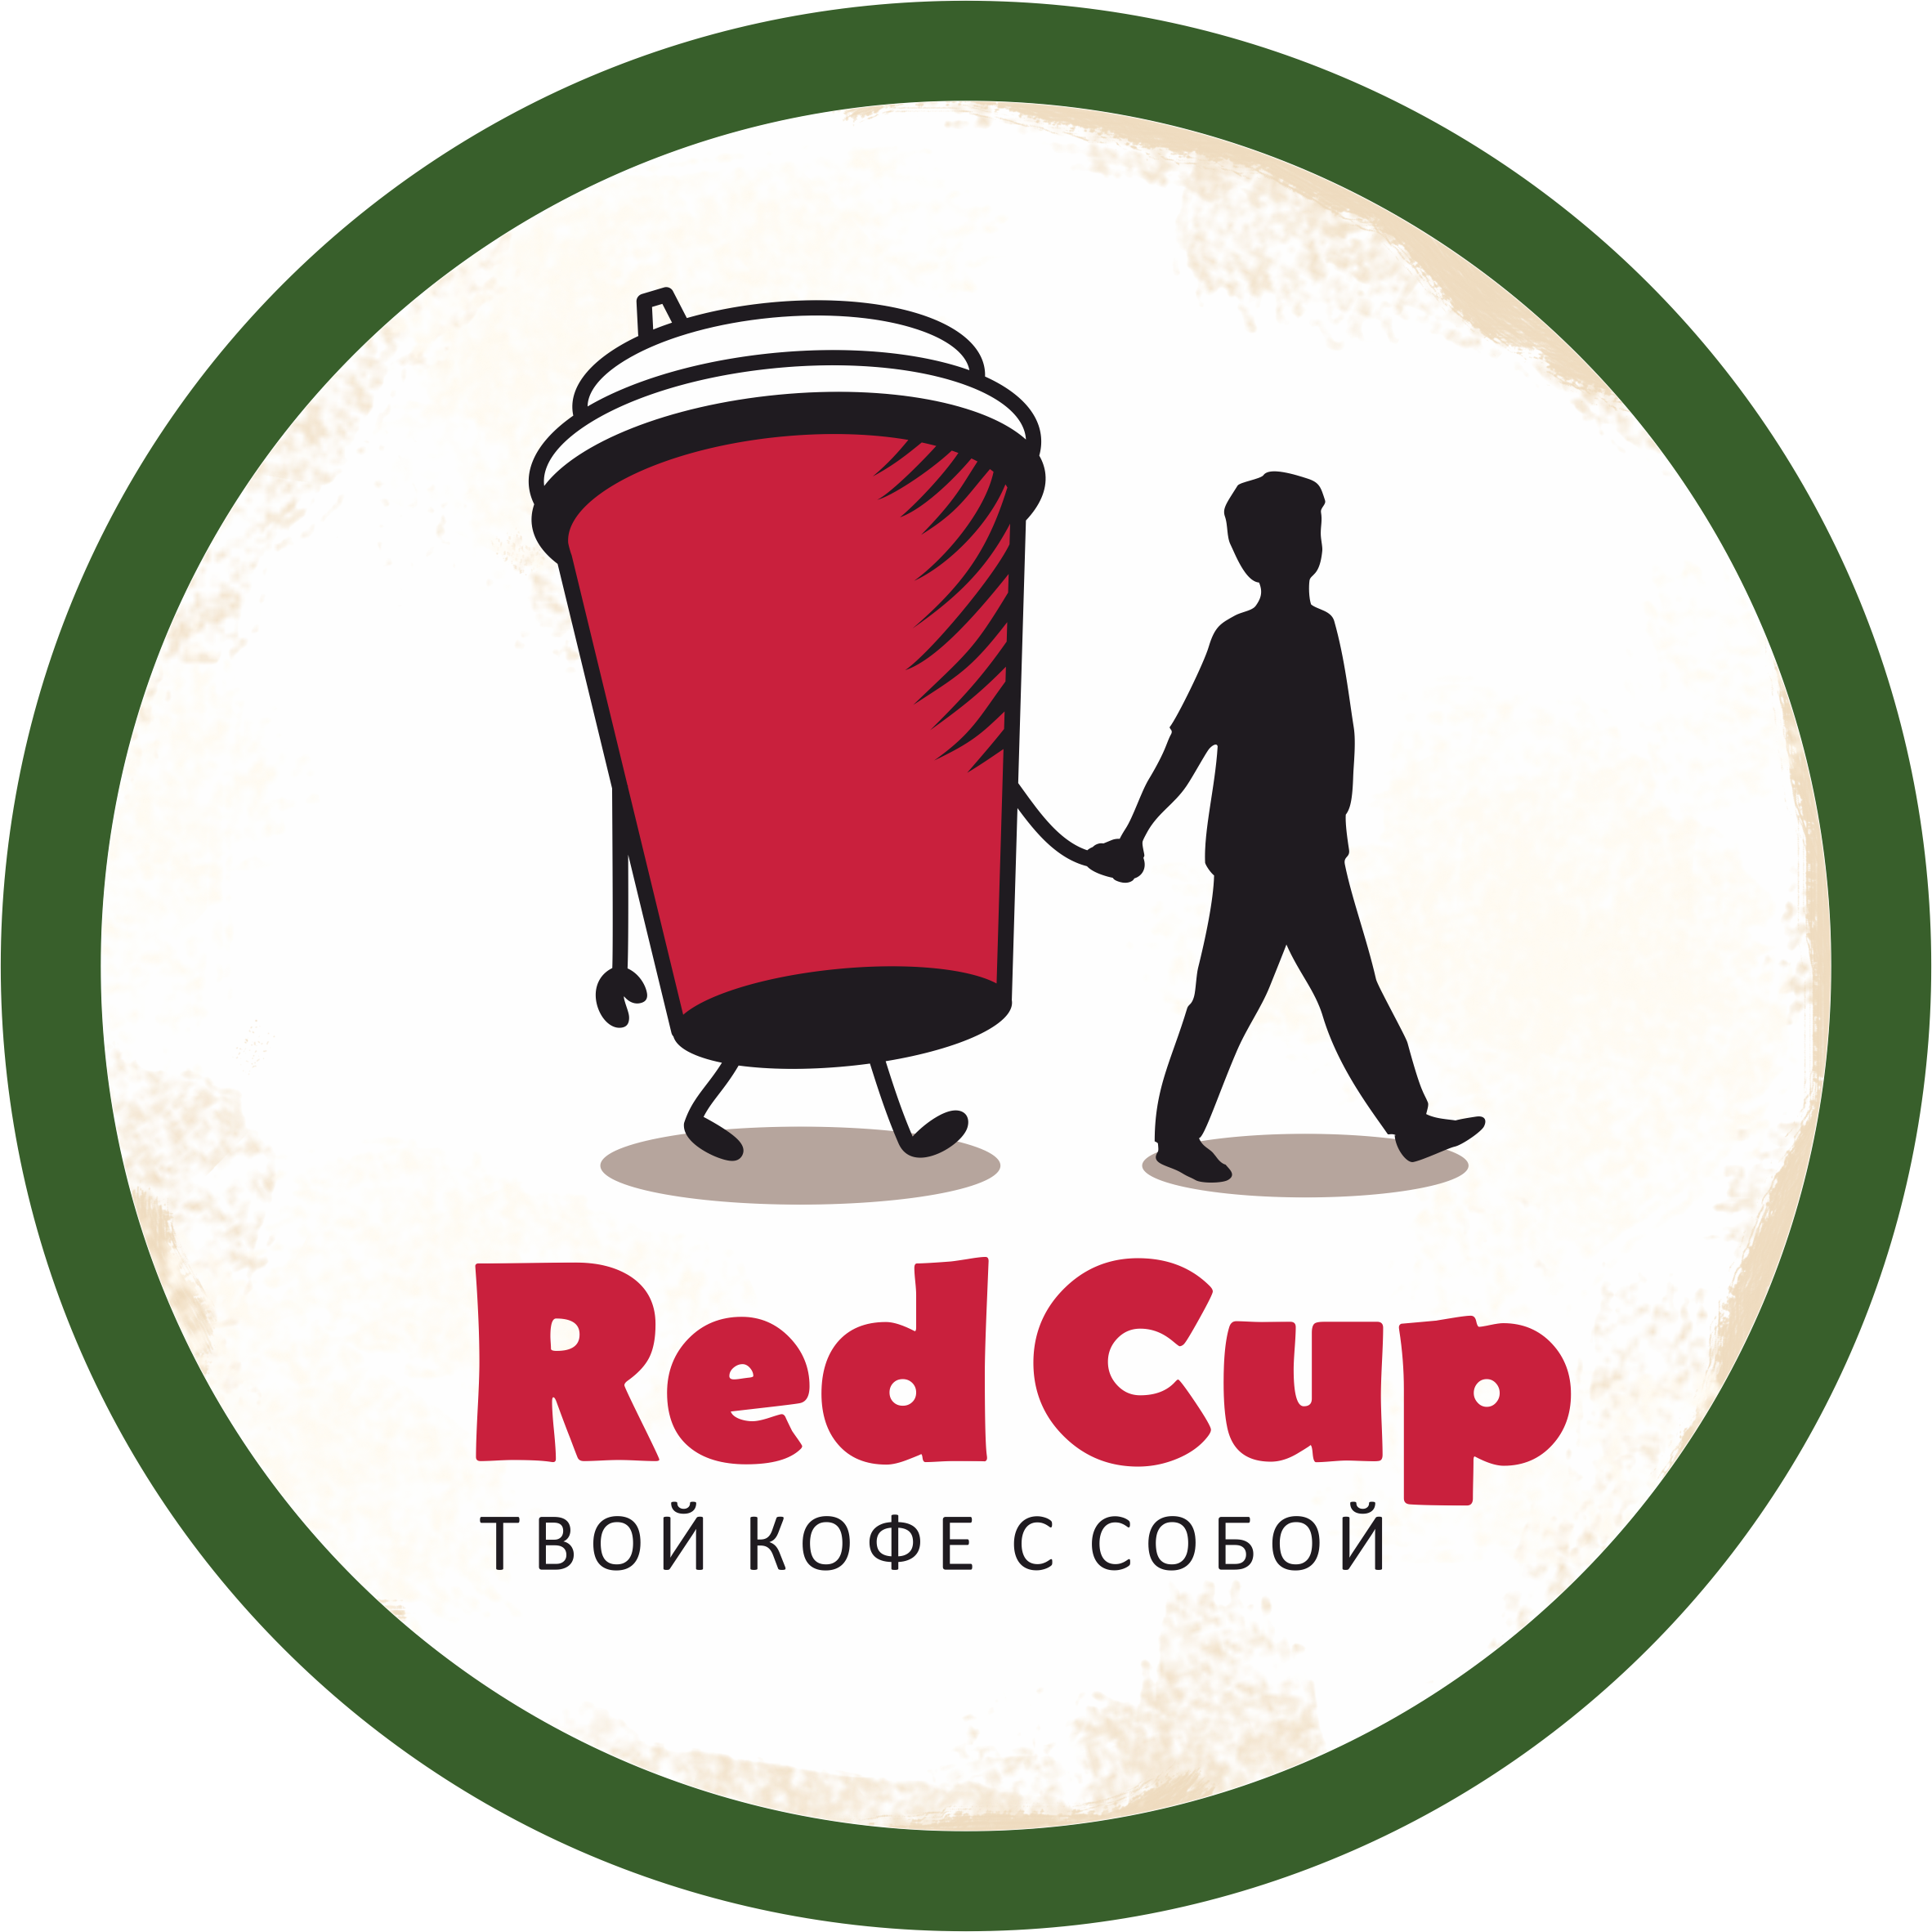 Red Cup кофе. Логотип кофе с собой. Red Cup кофейня. Red Cup логотип.